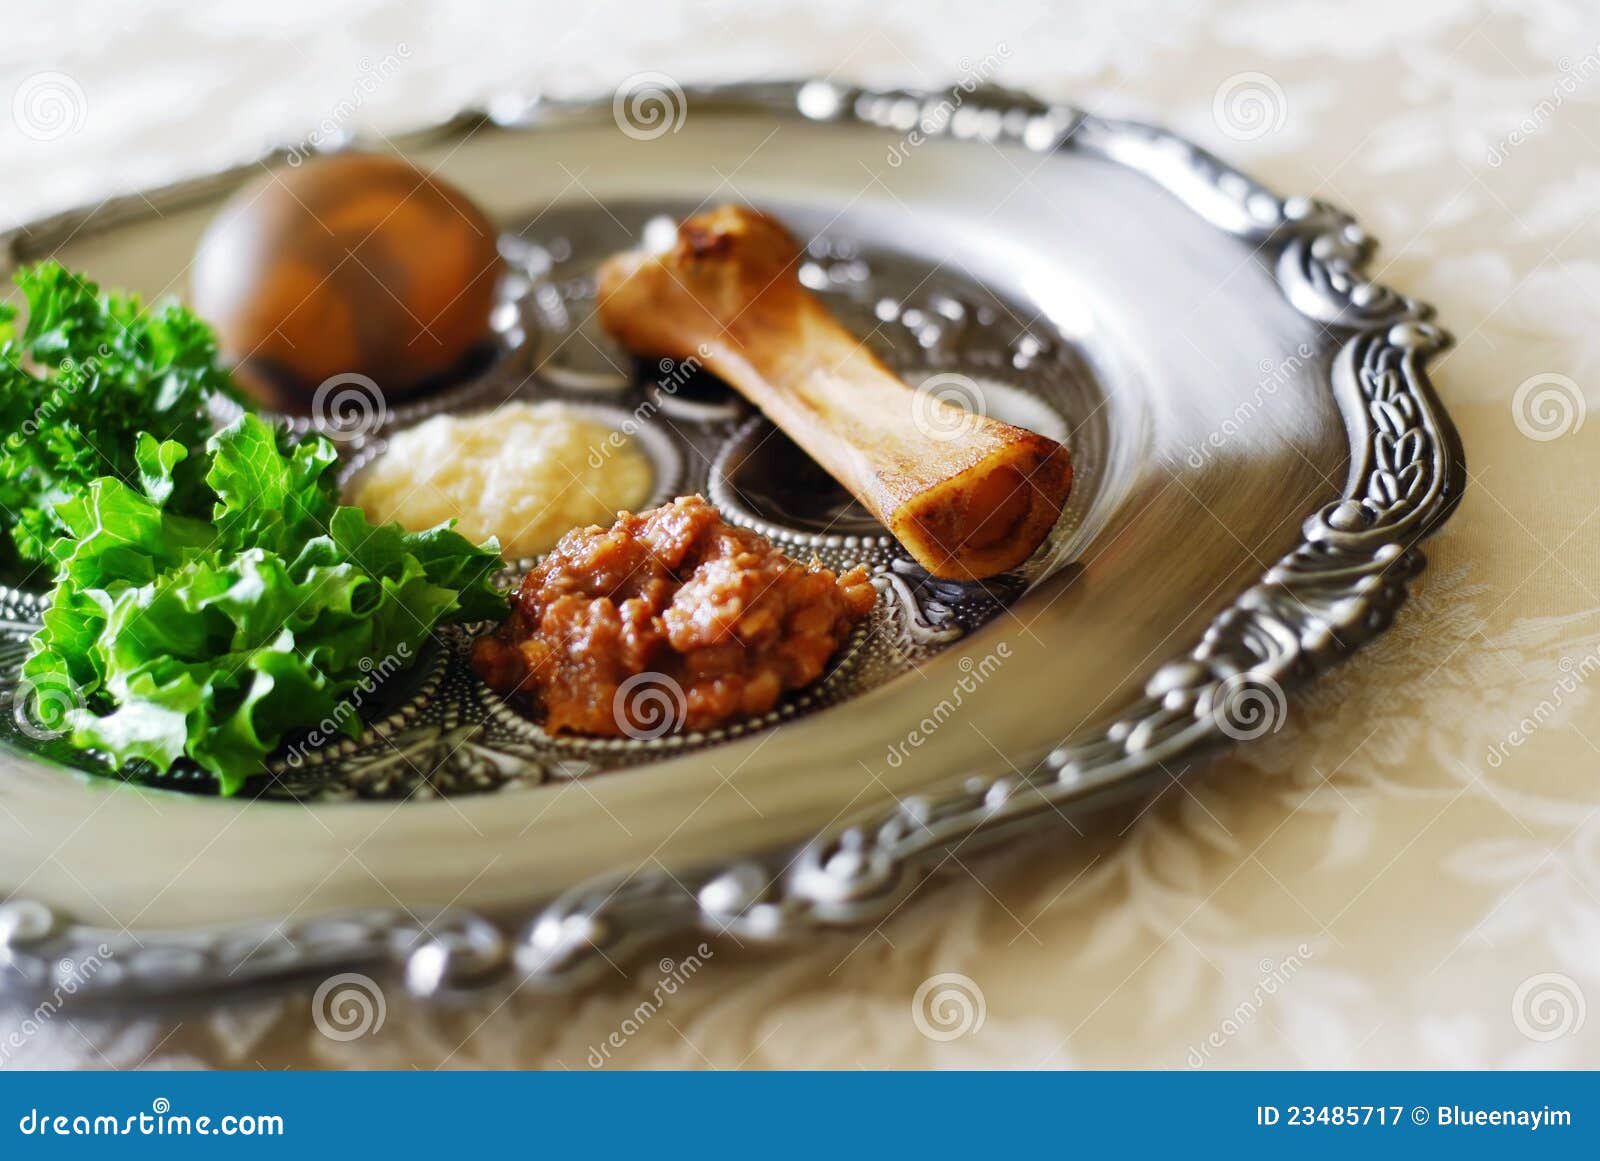 passover seder plate